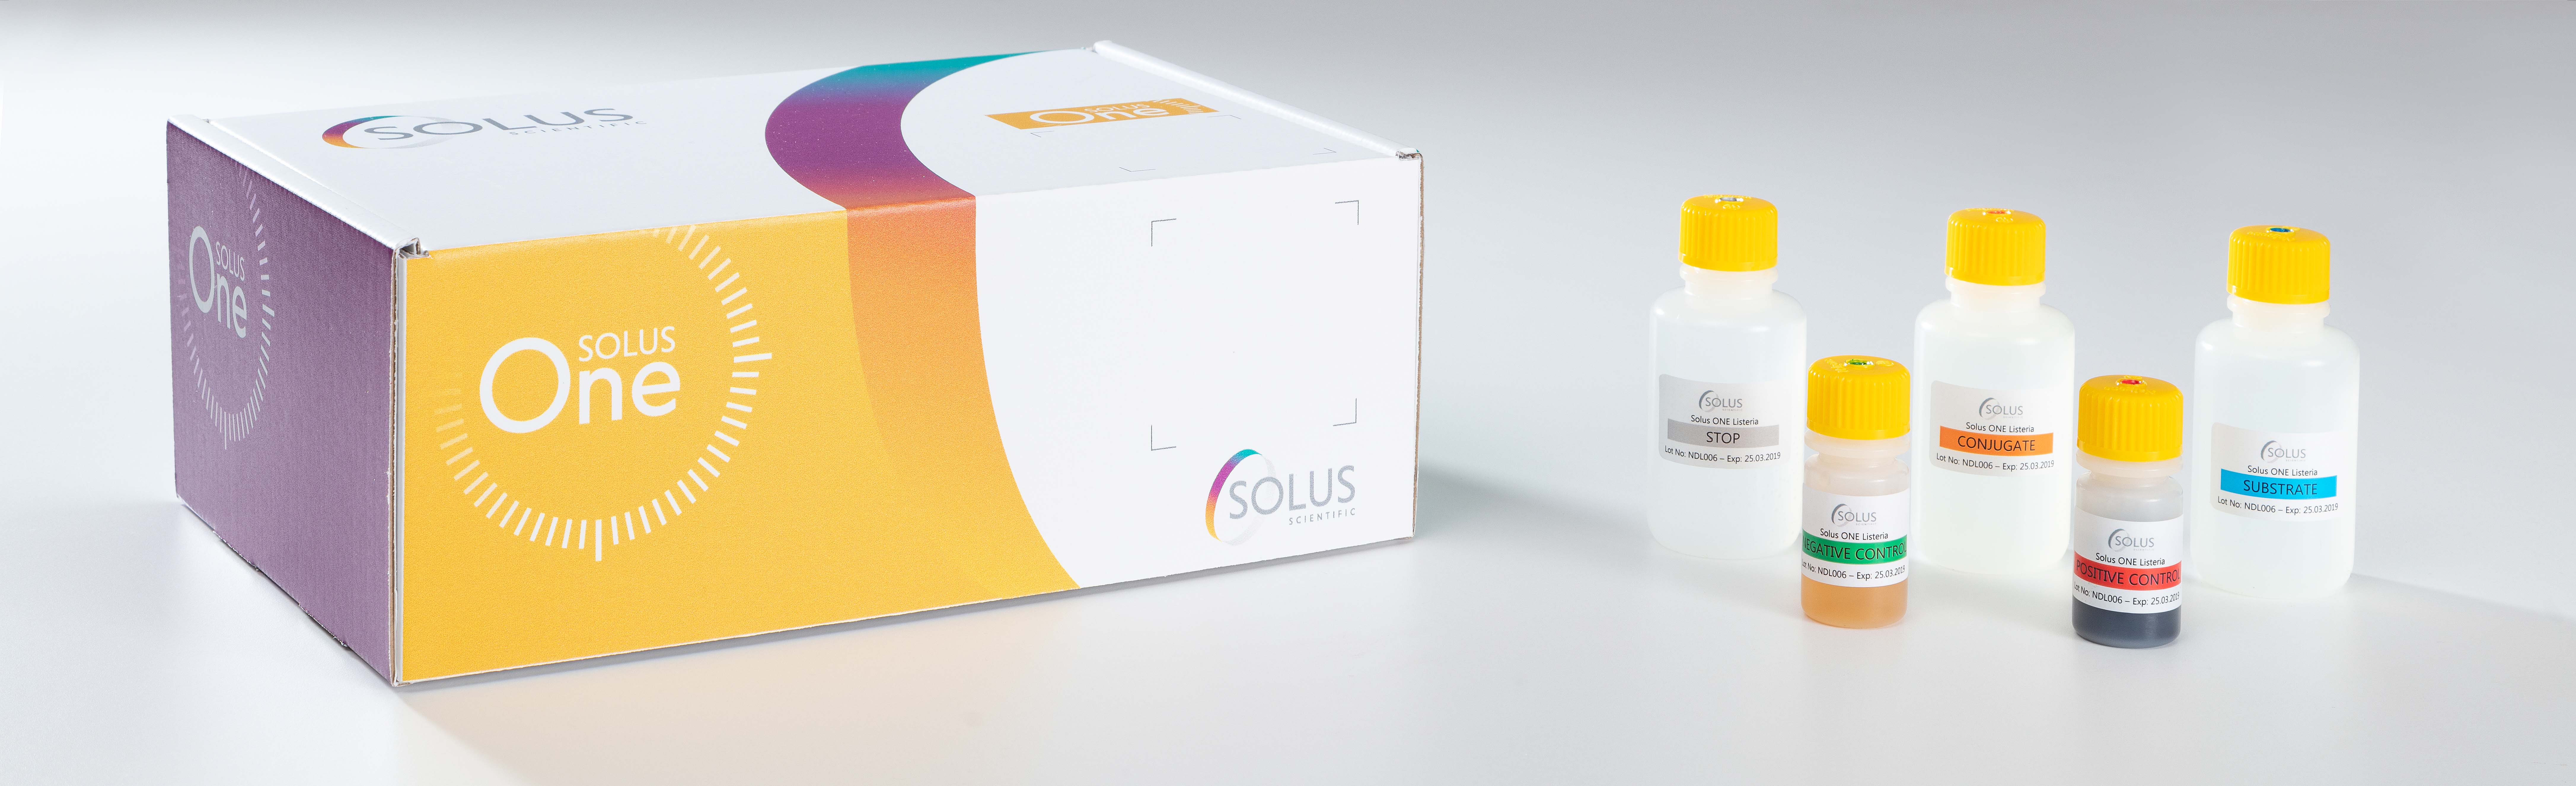 Solus One Listeria kit